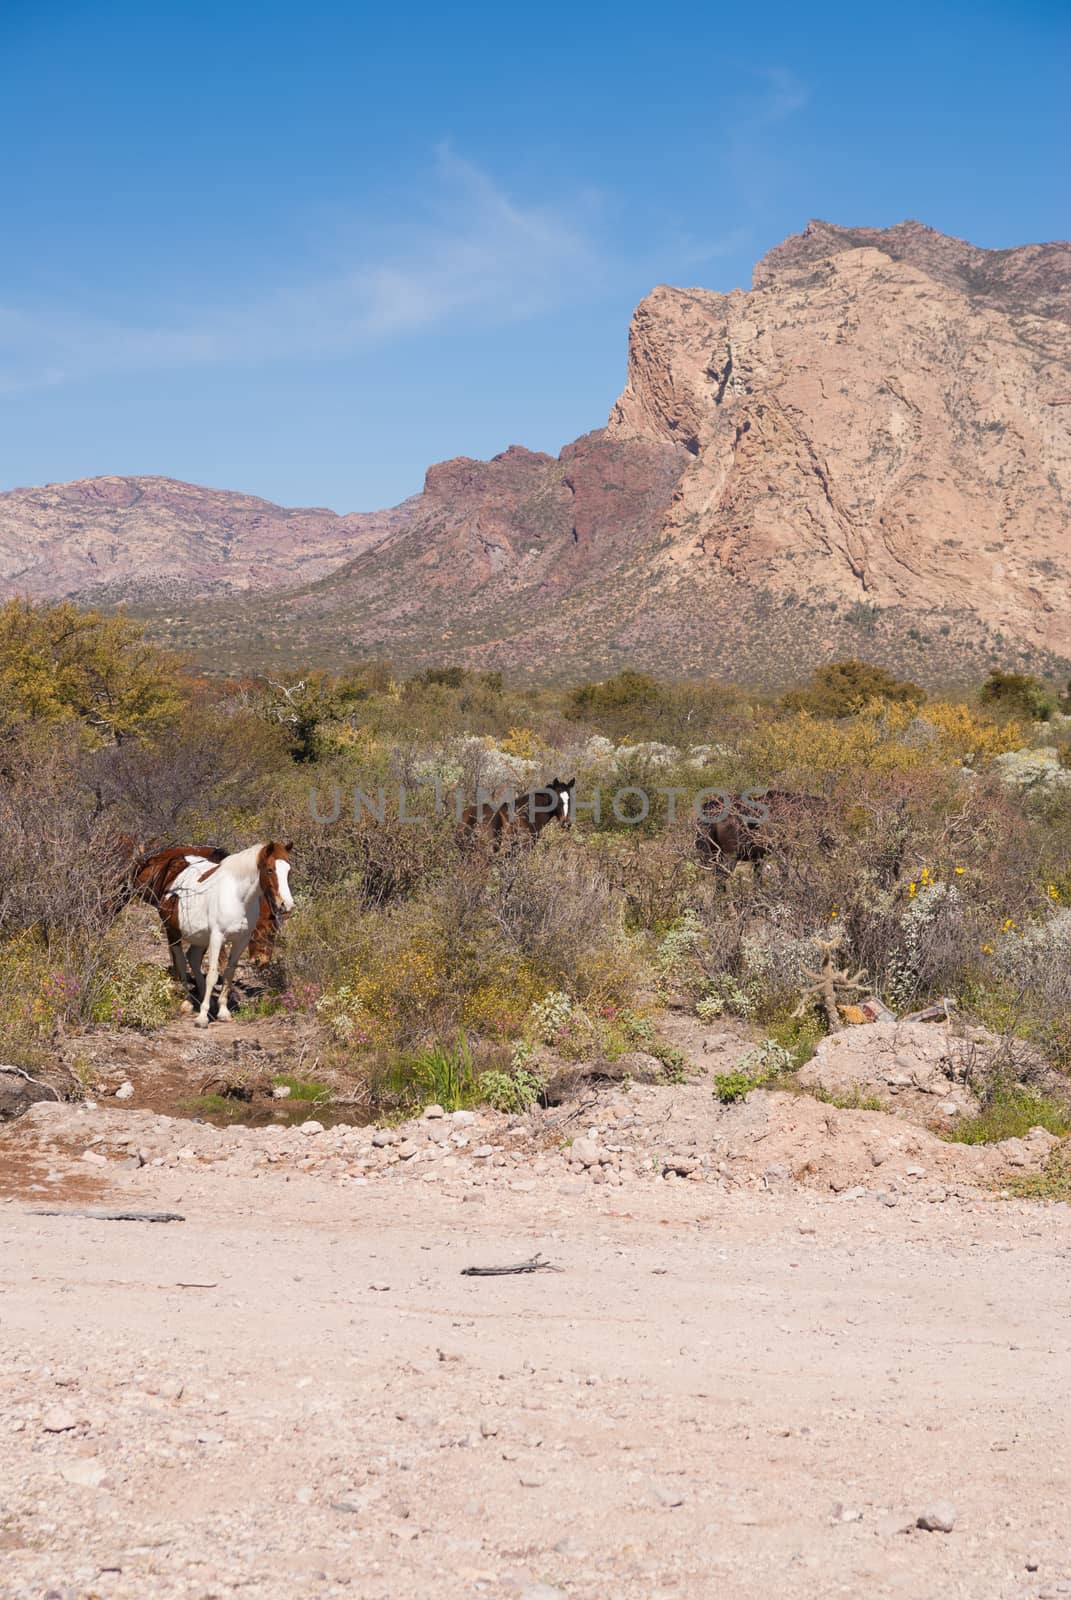 Wild horses in mountainous desert by emattil